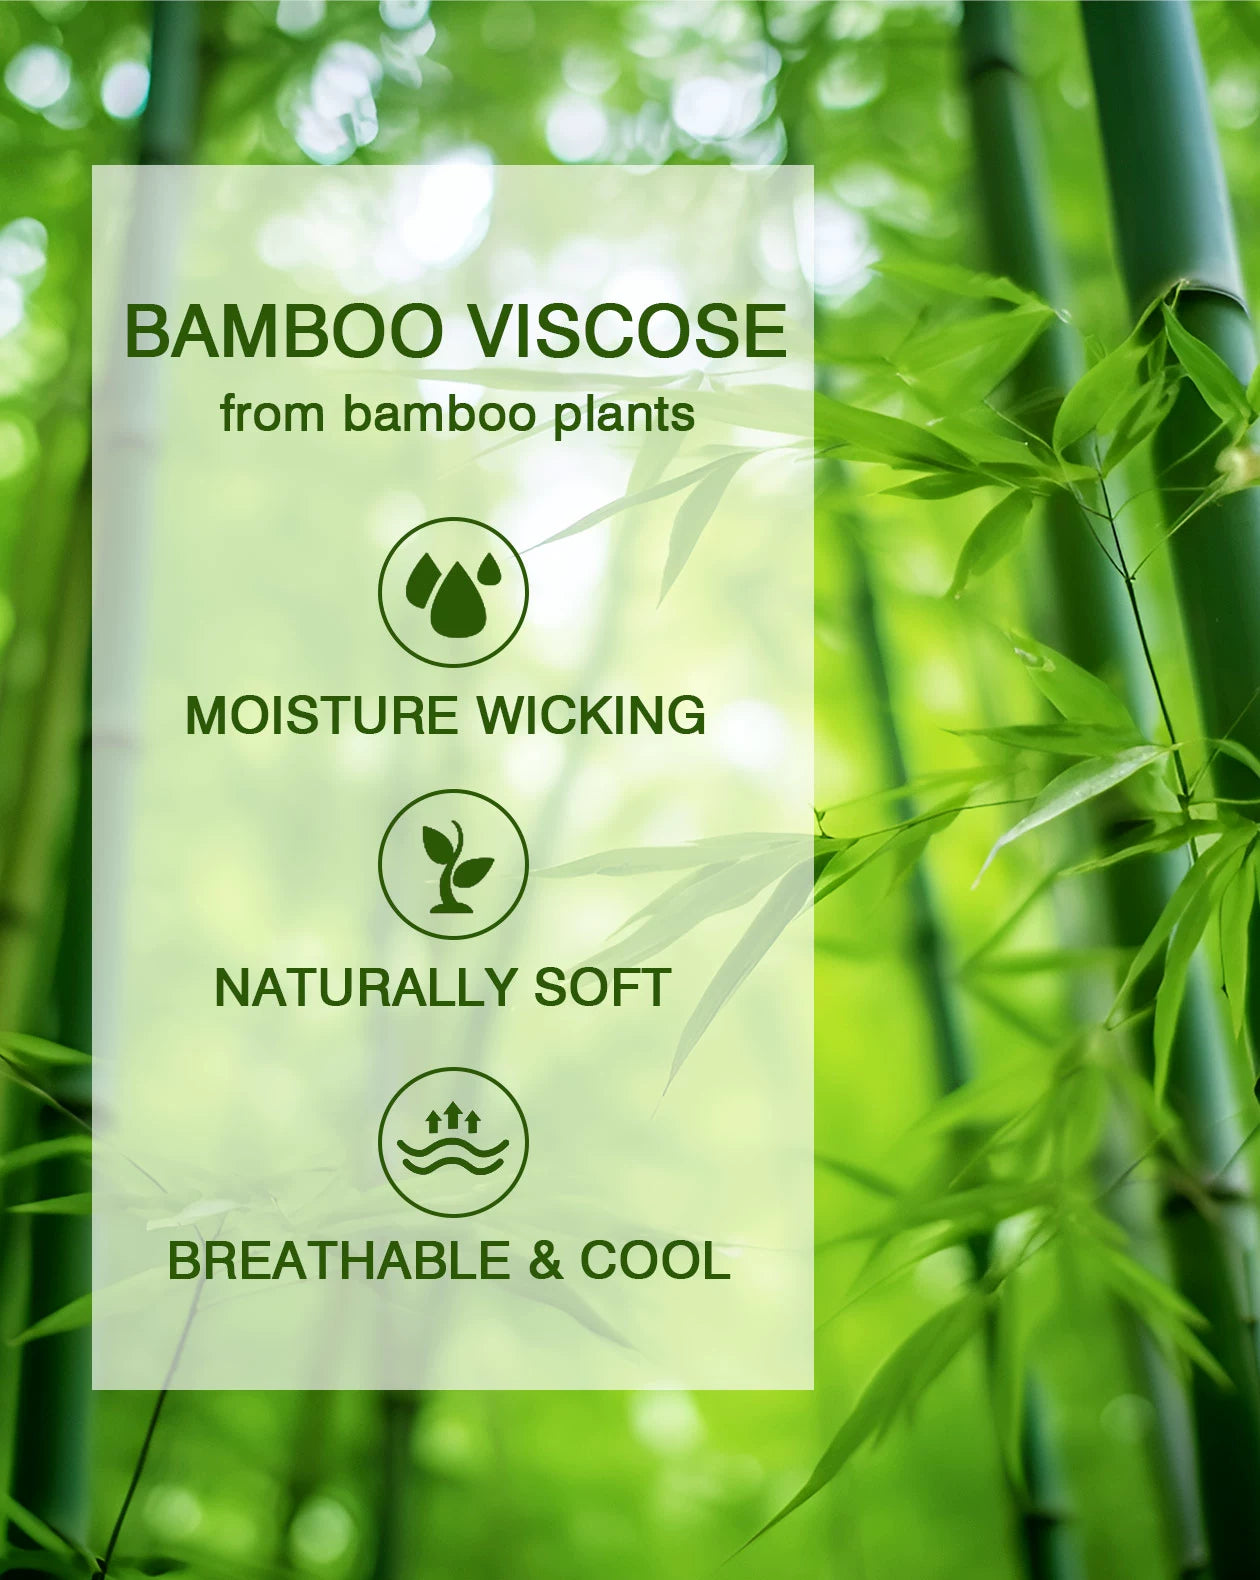 Dubinik® Bamboo Viscose Mens Short Sleeve Button Down Pockets Shirts#39015